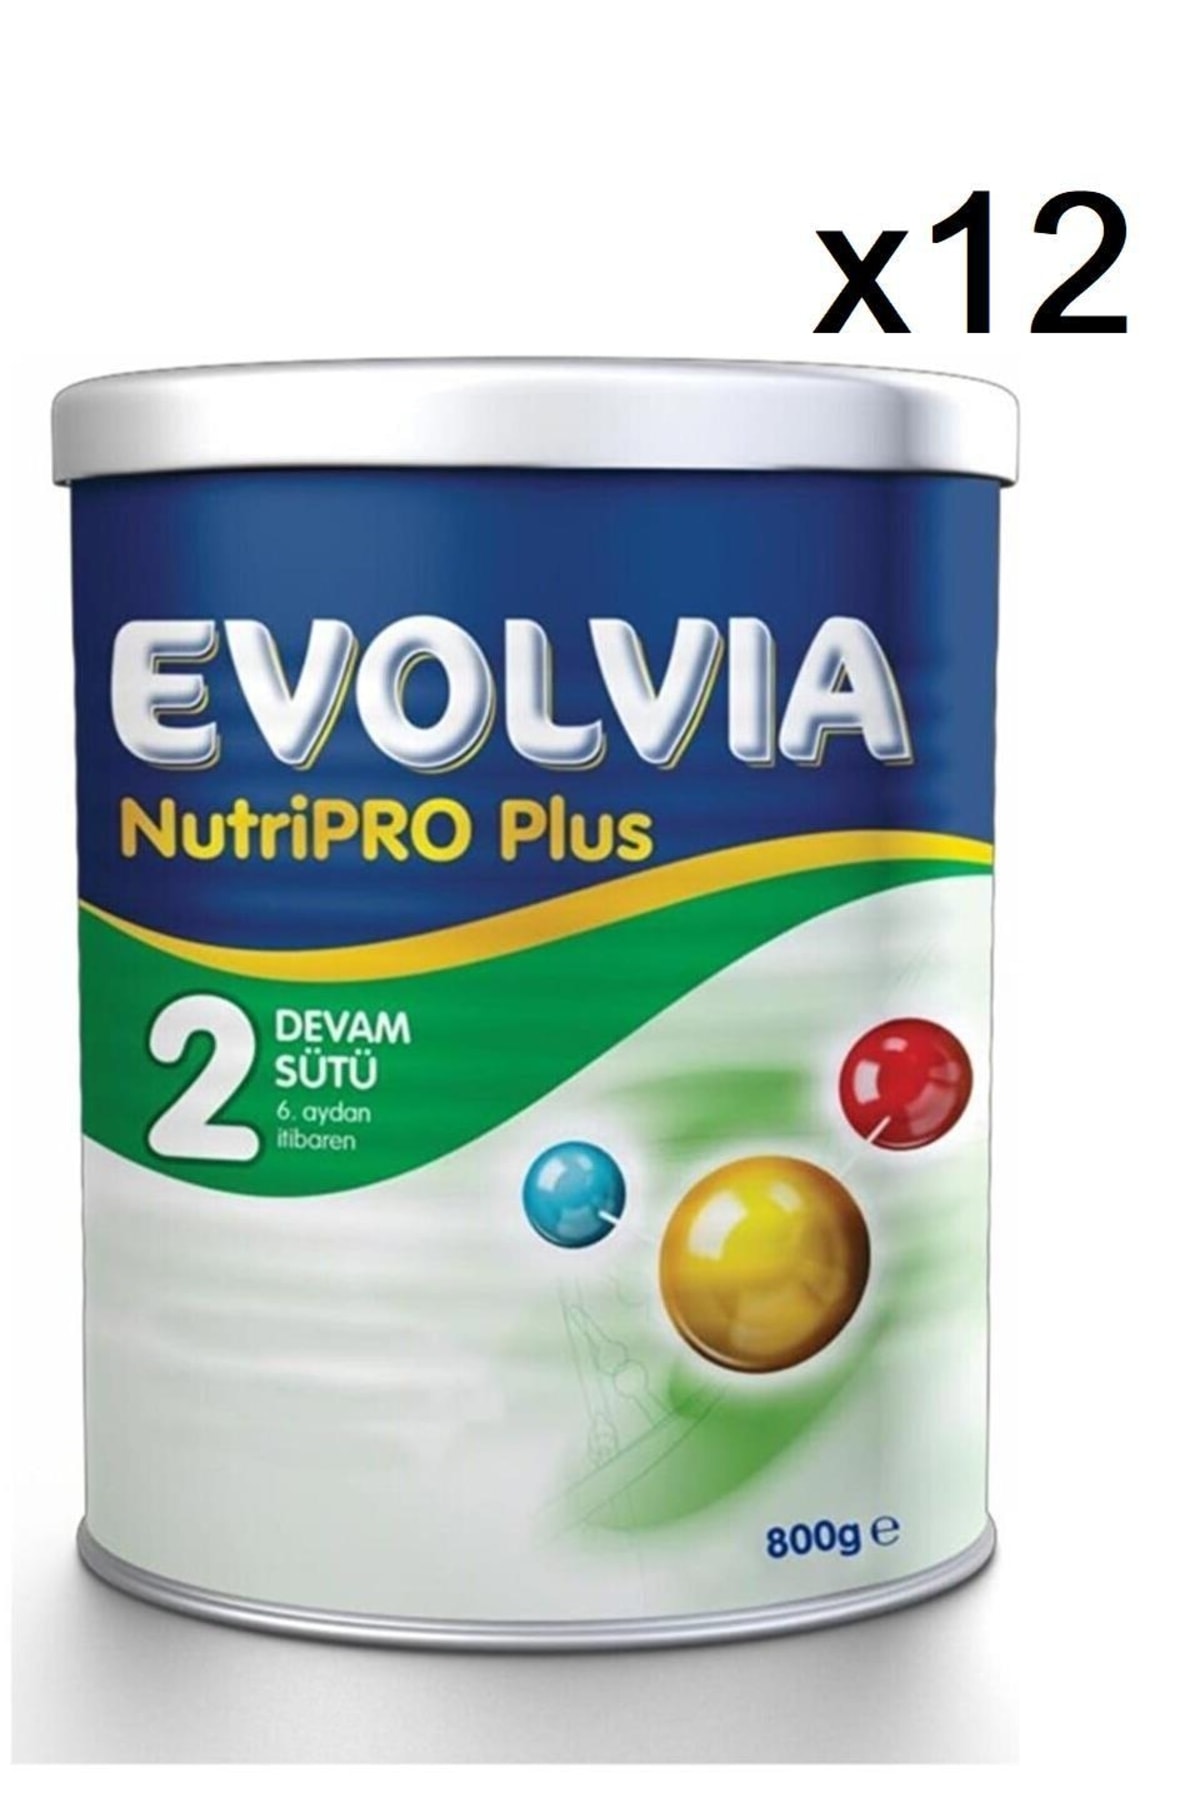 Evolvia Nutripro Plus 2 Devam Sütü 800 Gr 12 Adet